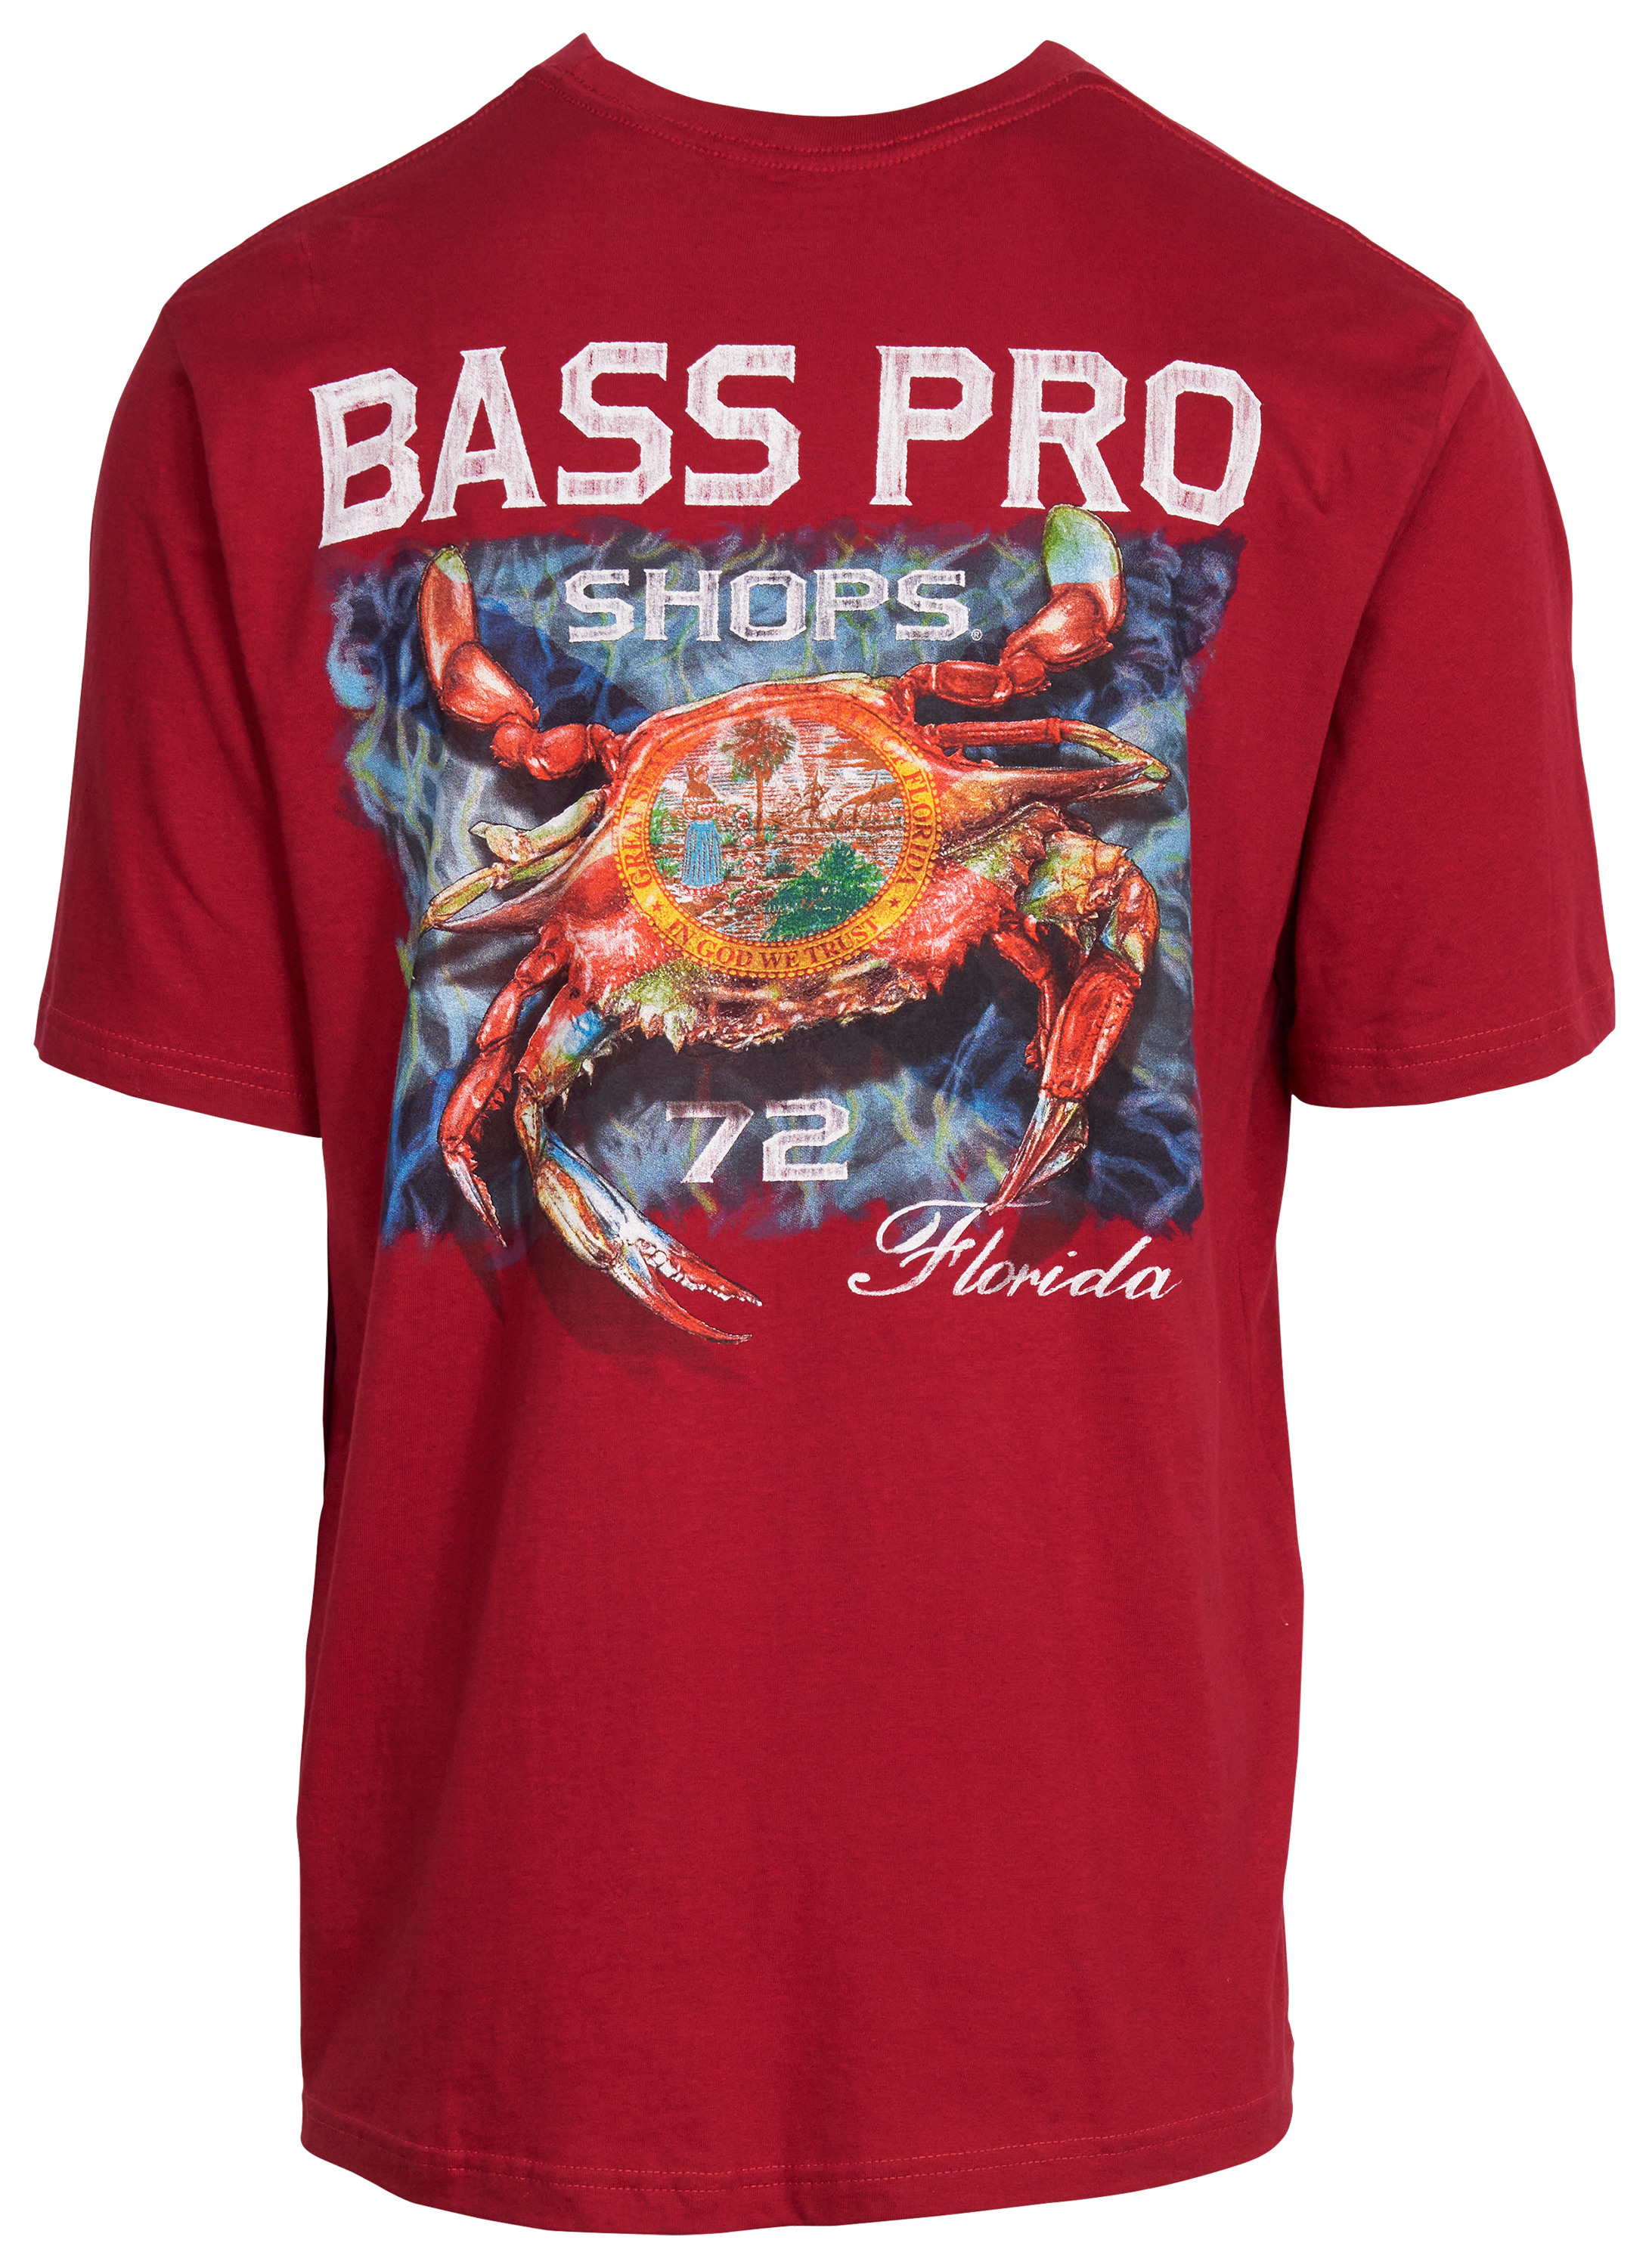 Bass Pro Shops Bass Pro Shop Fishing Hunting Over Size 3XL